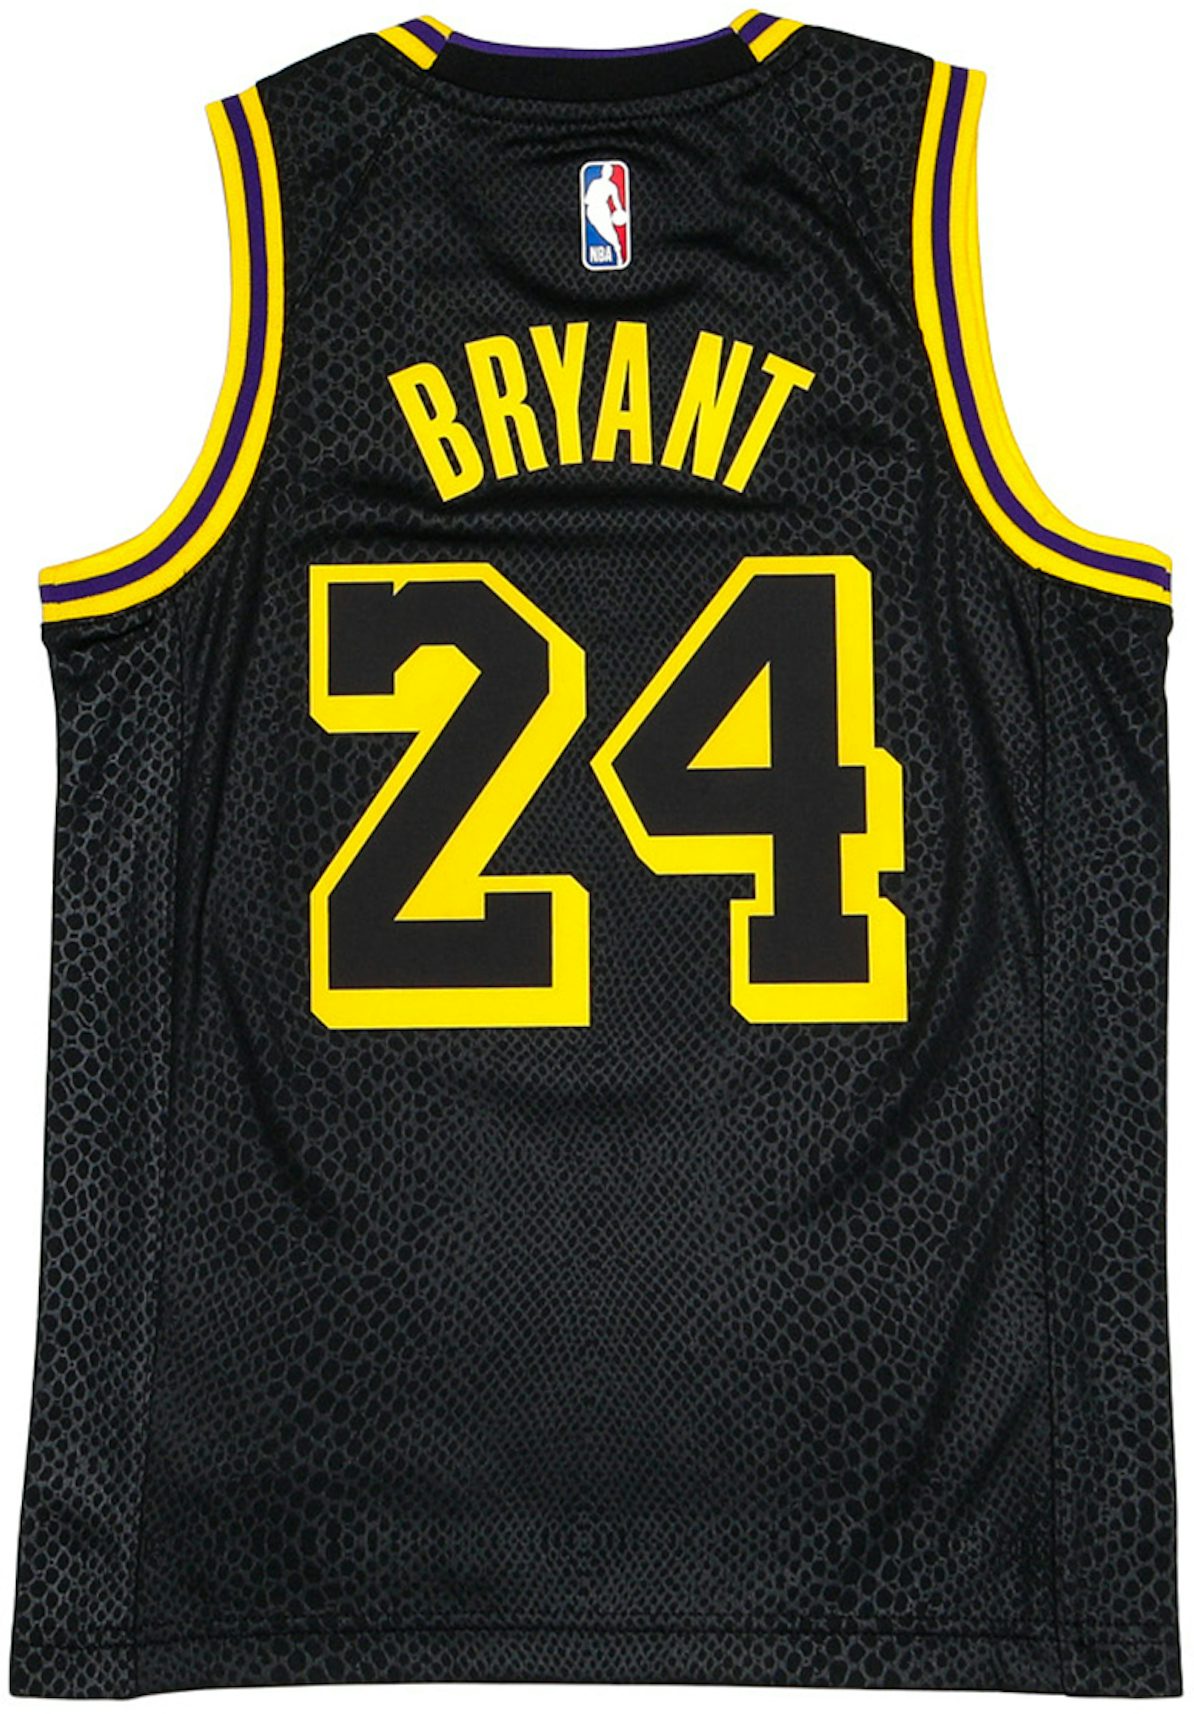 Kobe Bryant Black Mamba Jersey 